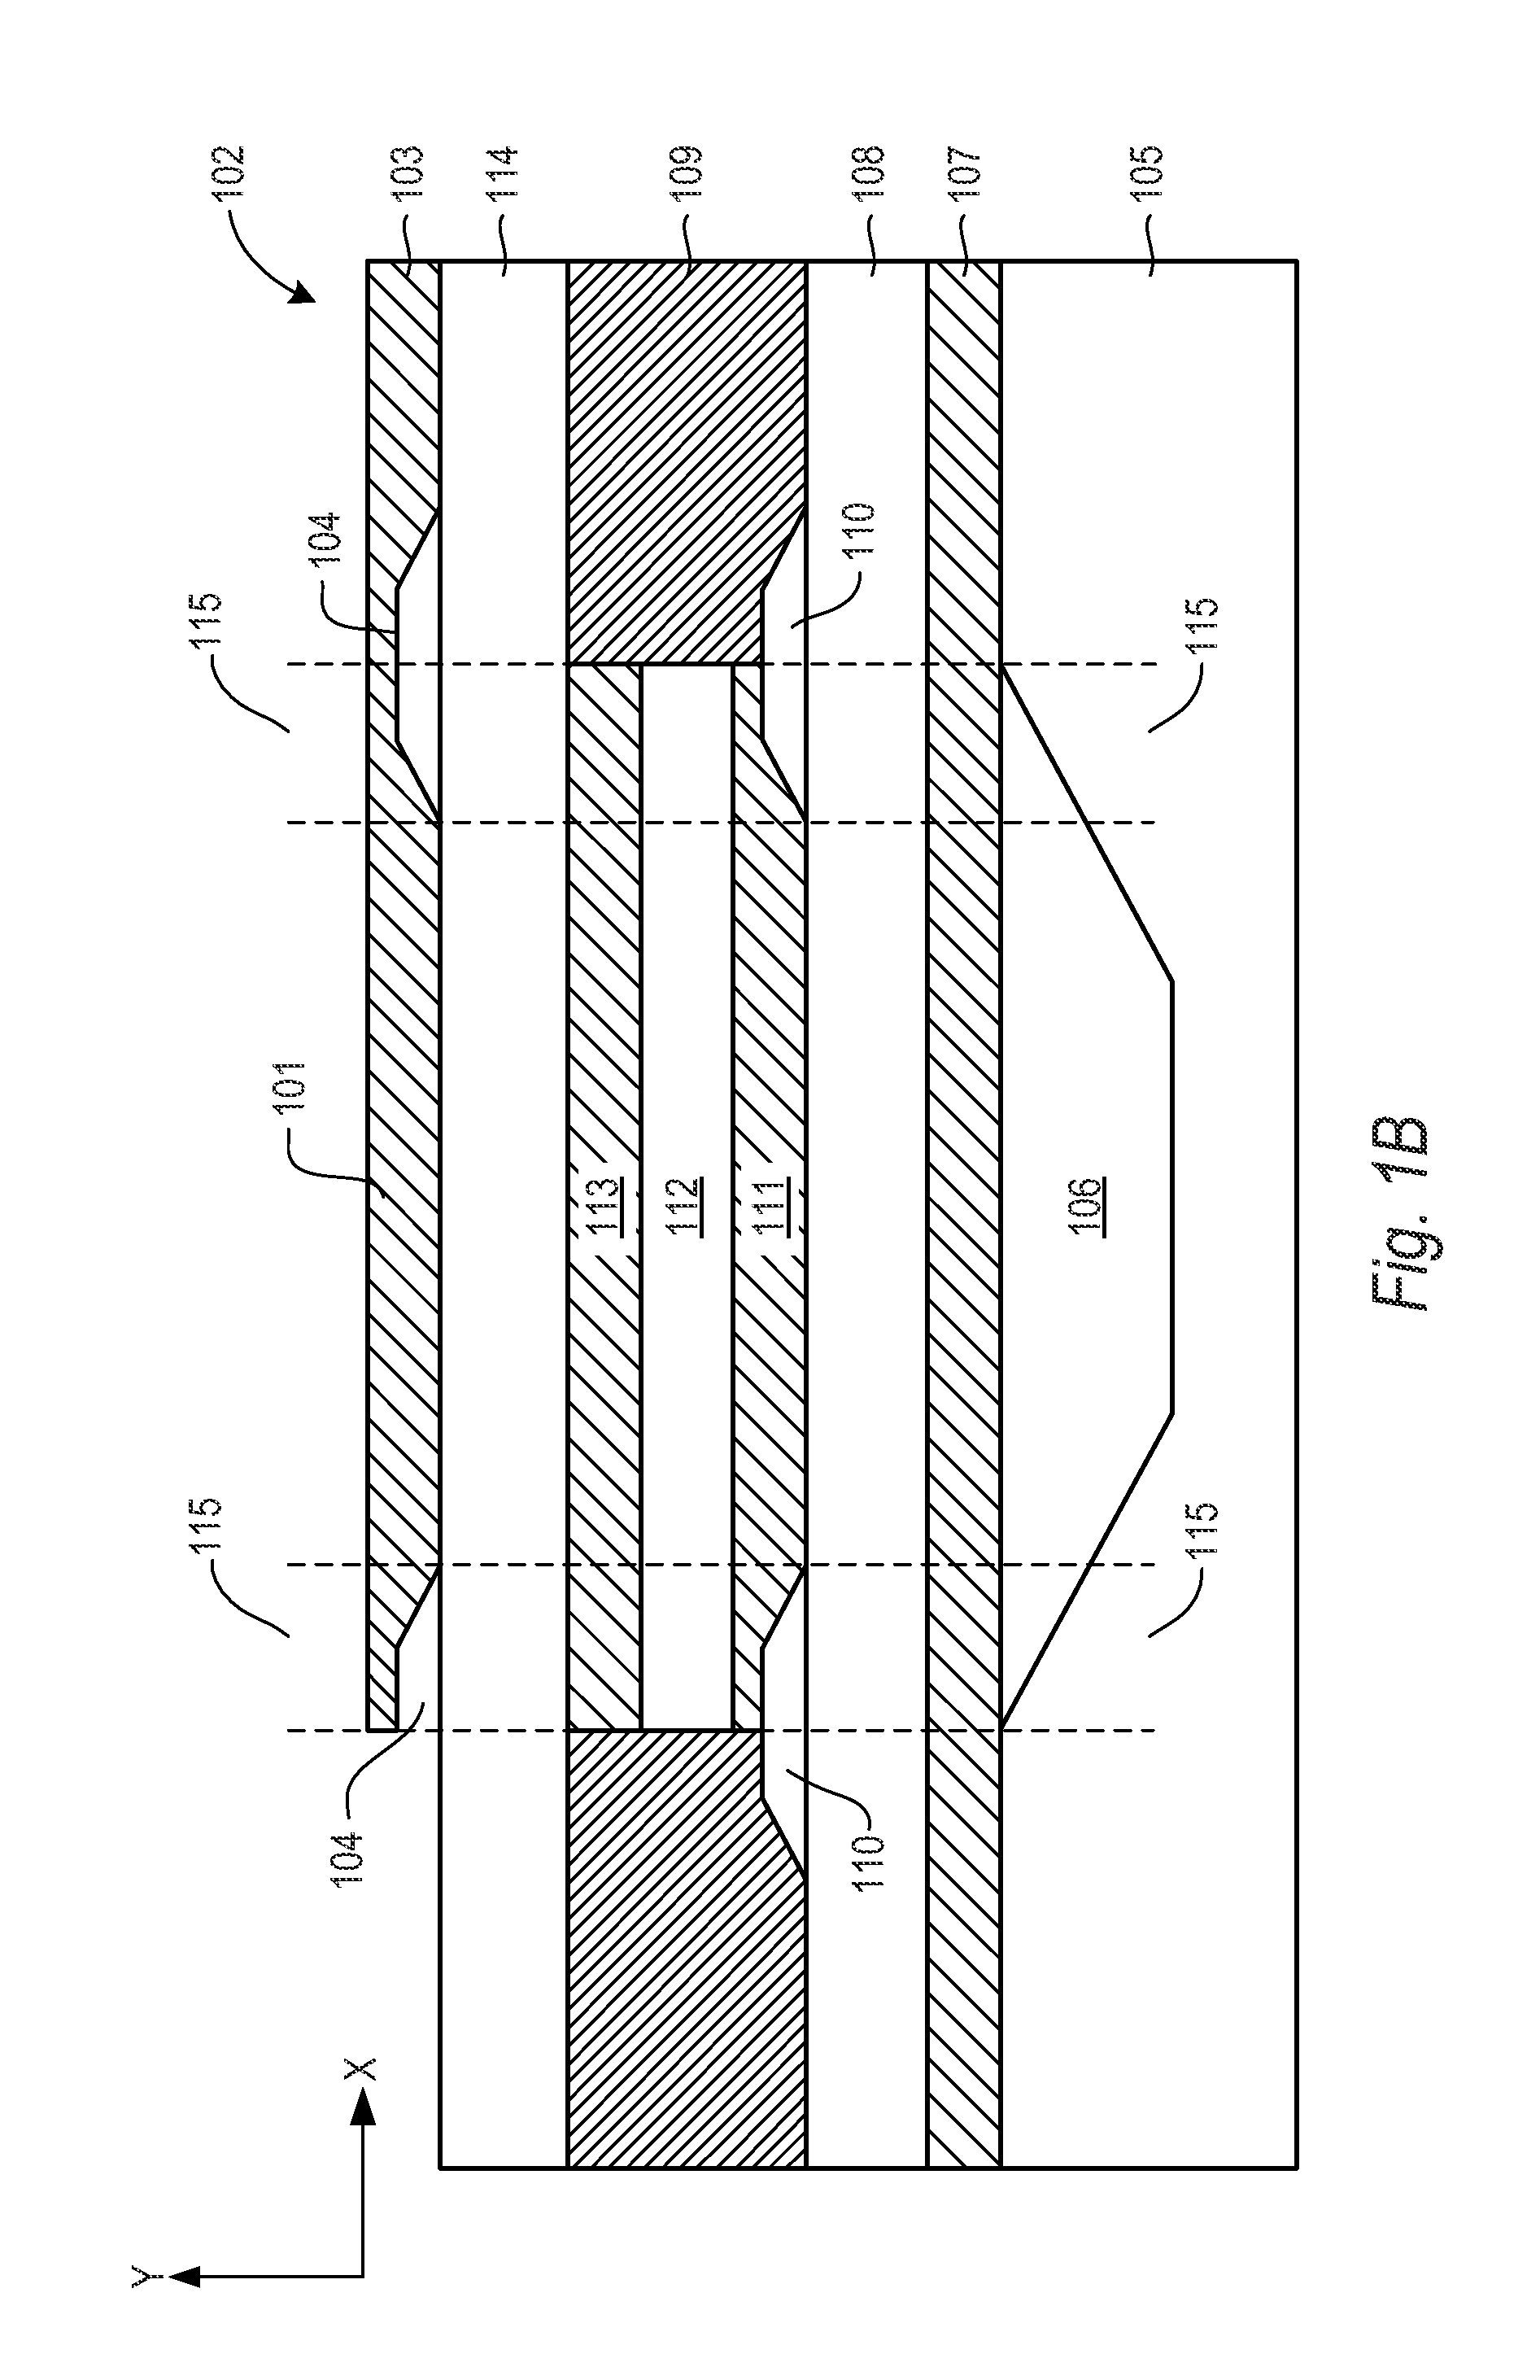 Coupled resonator filter comprising a bridge